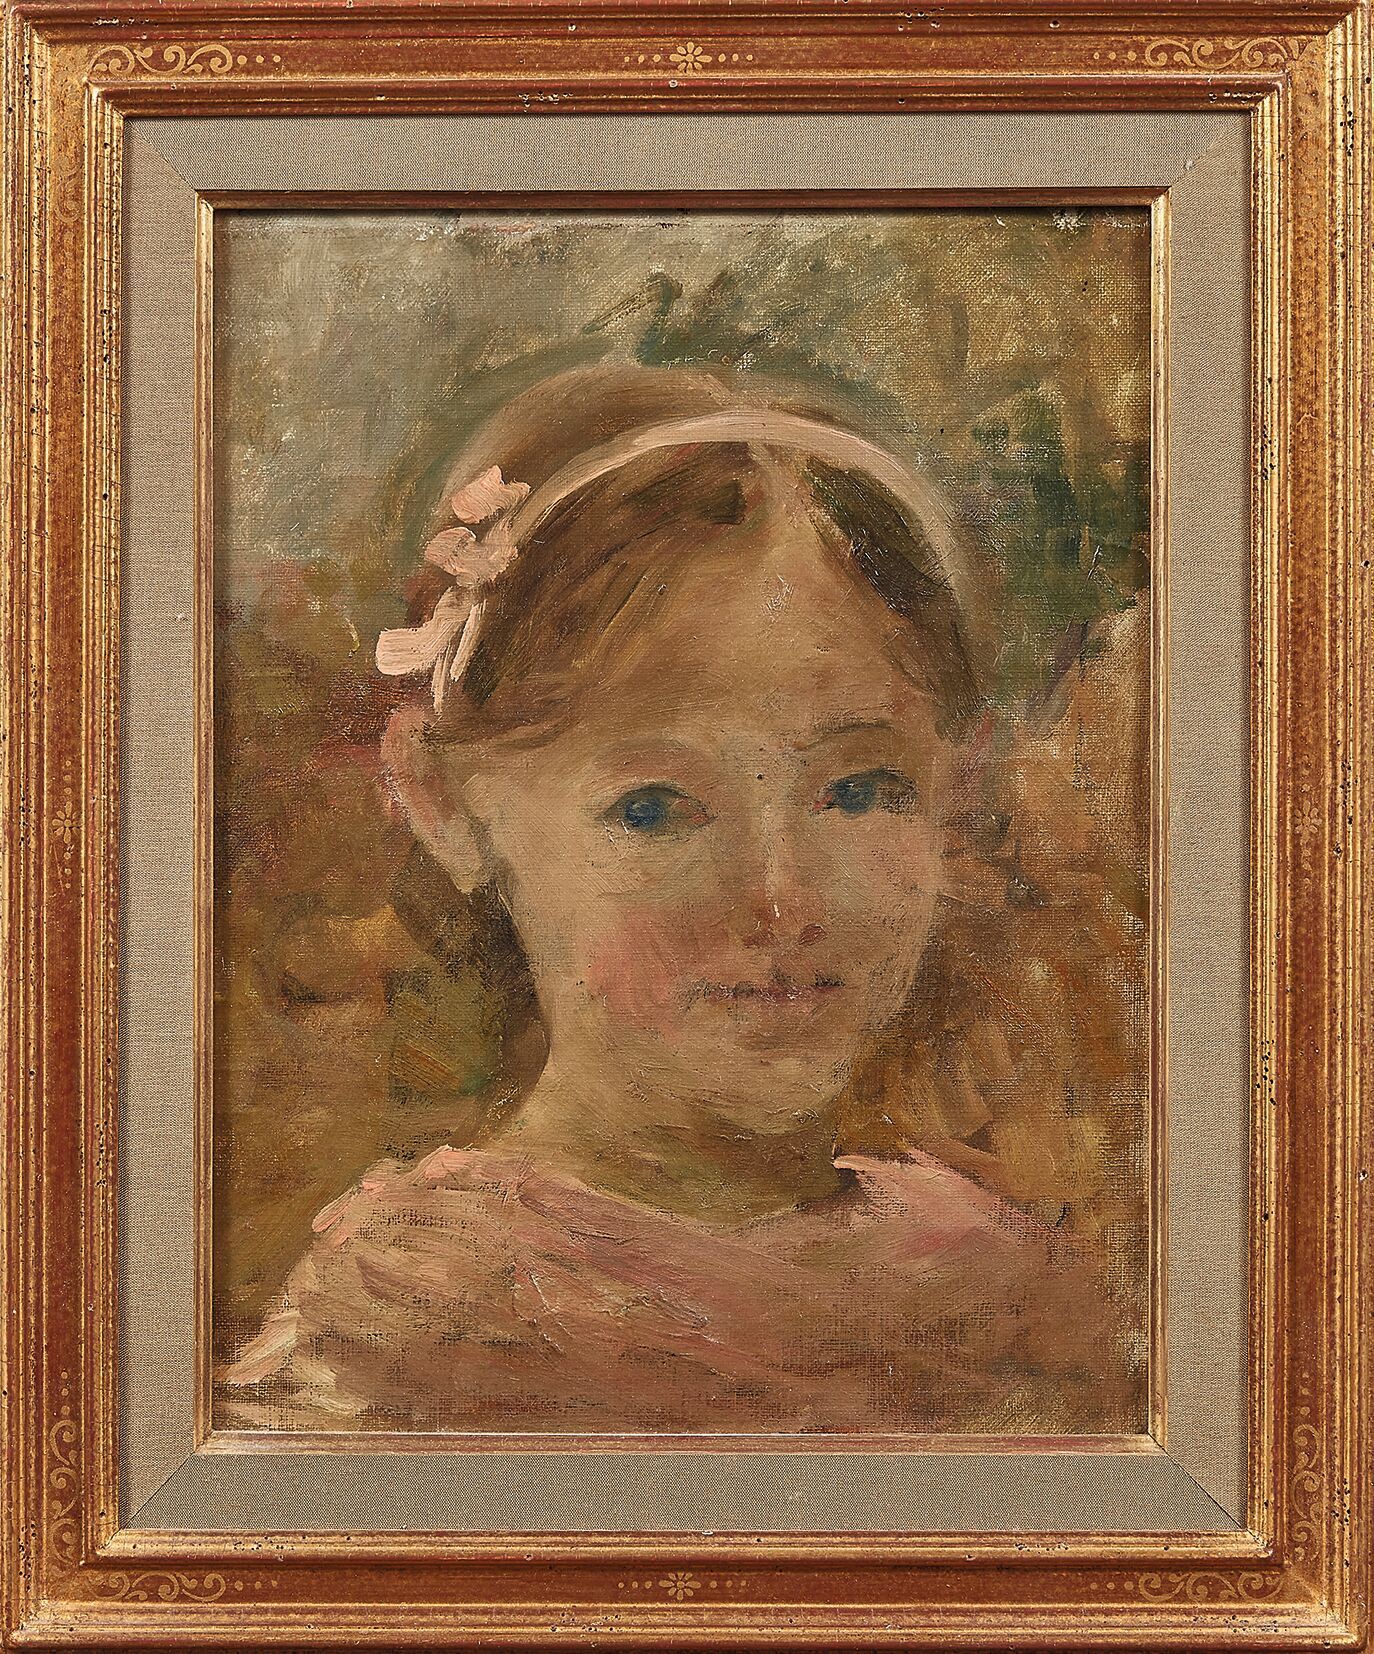 Null Alys PRAT (1886-1924)
The pink headband
Oil on canvas.
34,5 x 26,5 cm